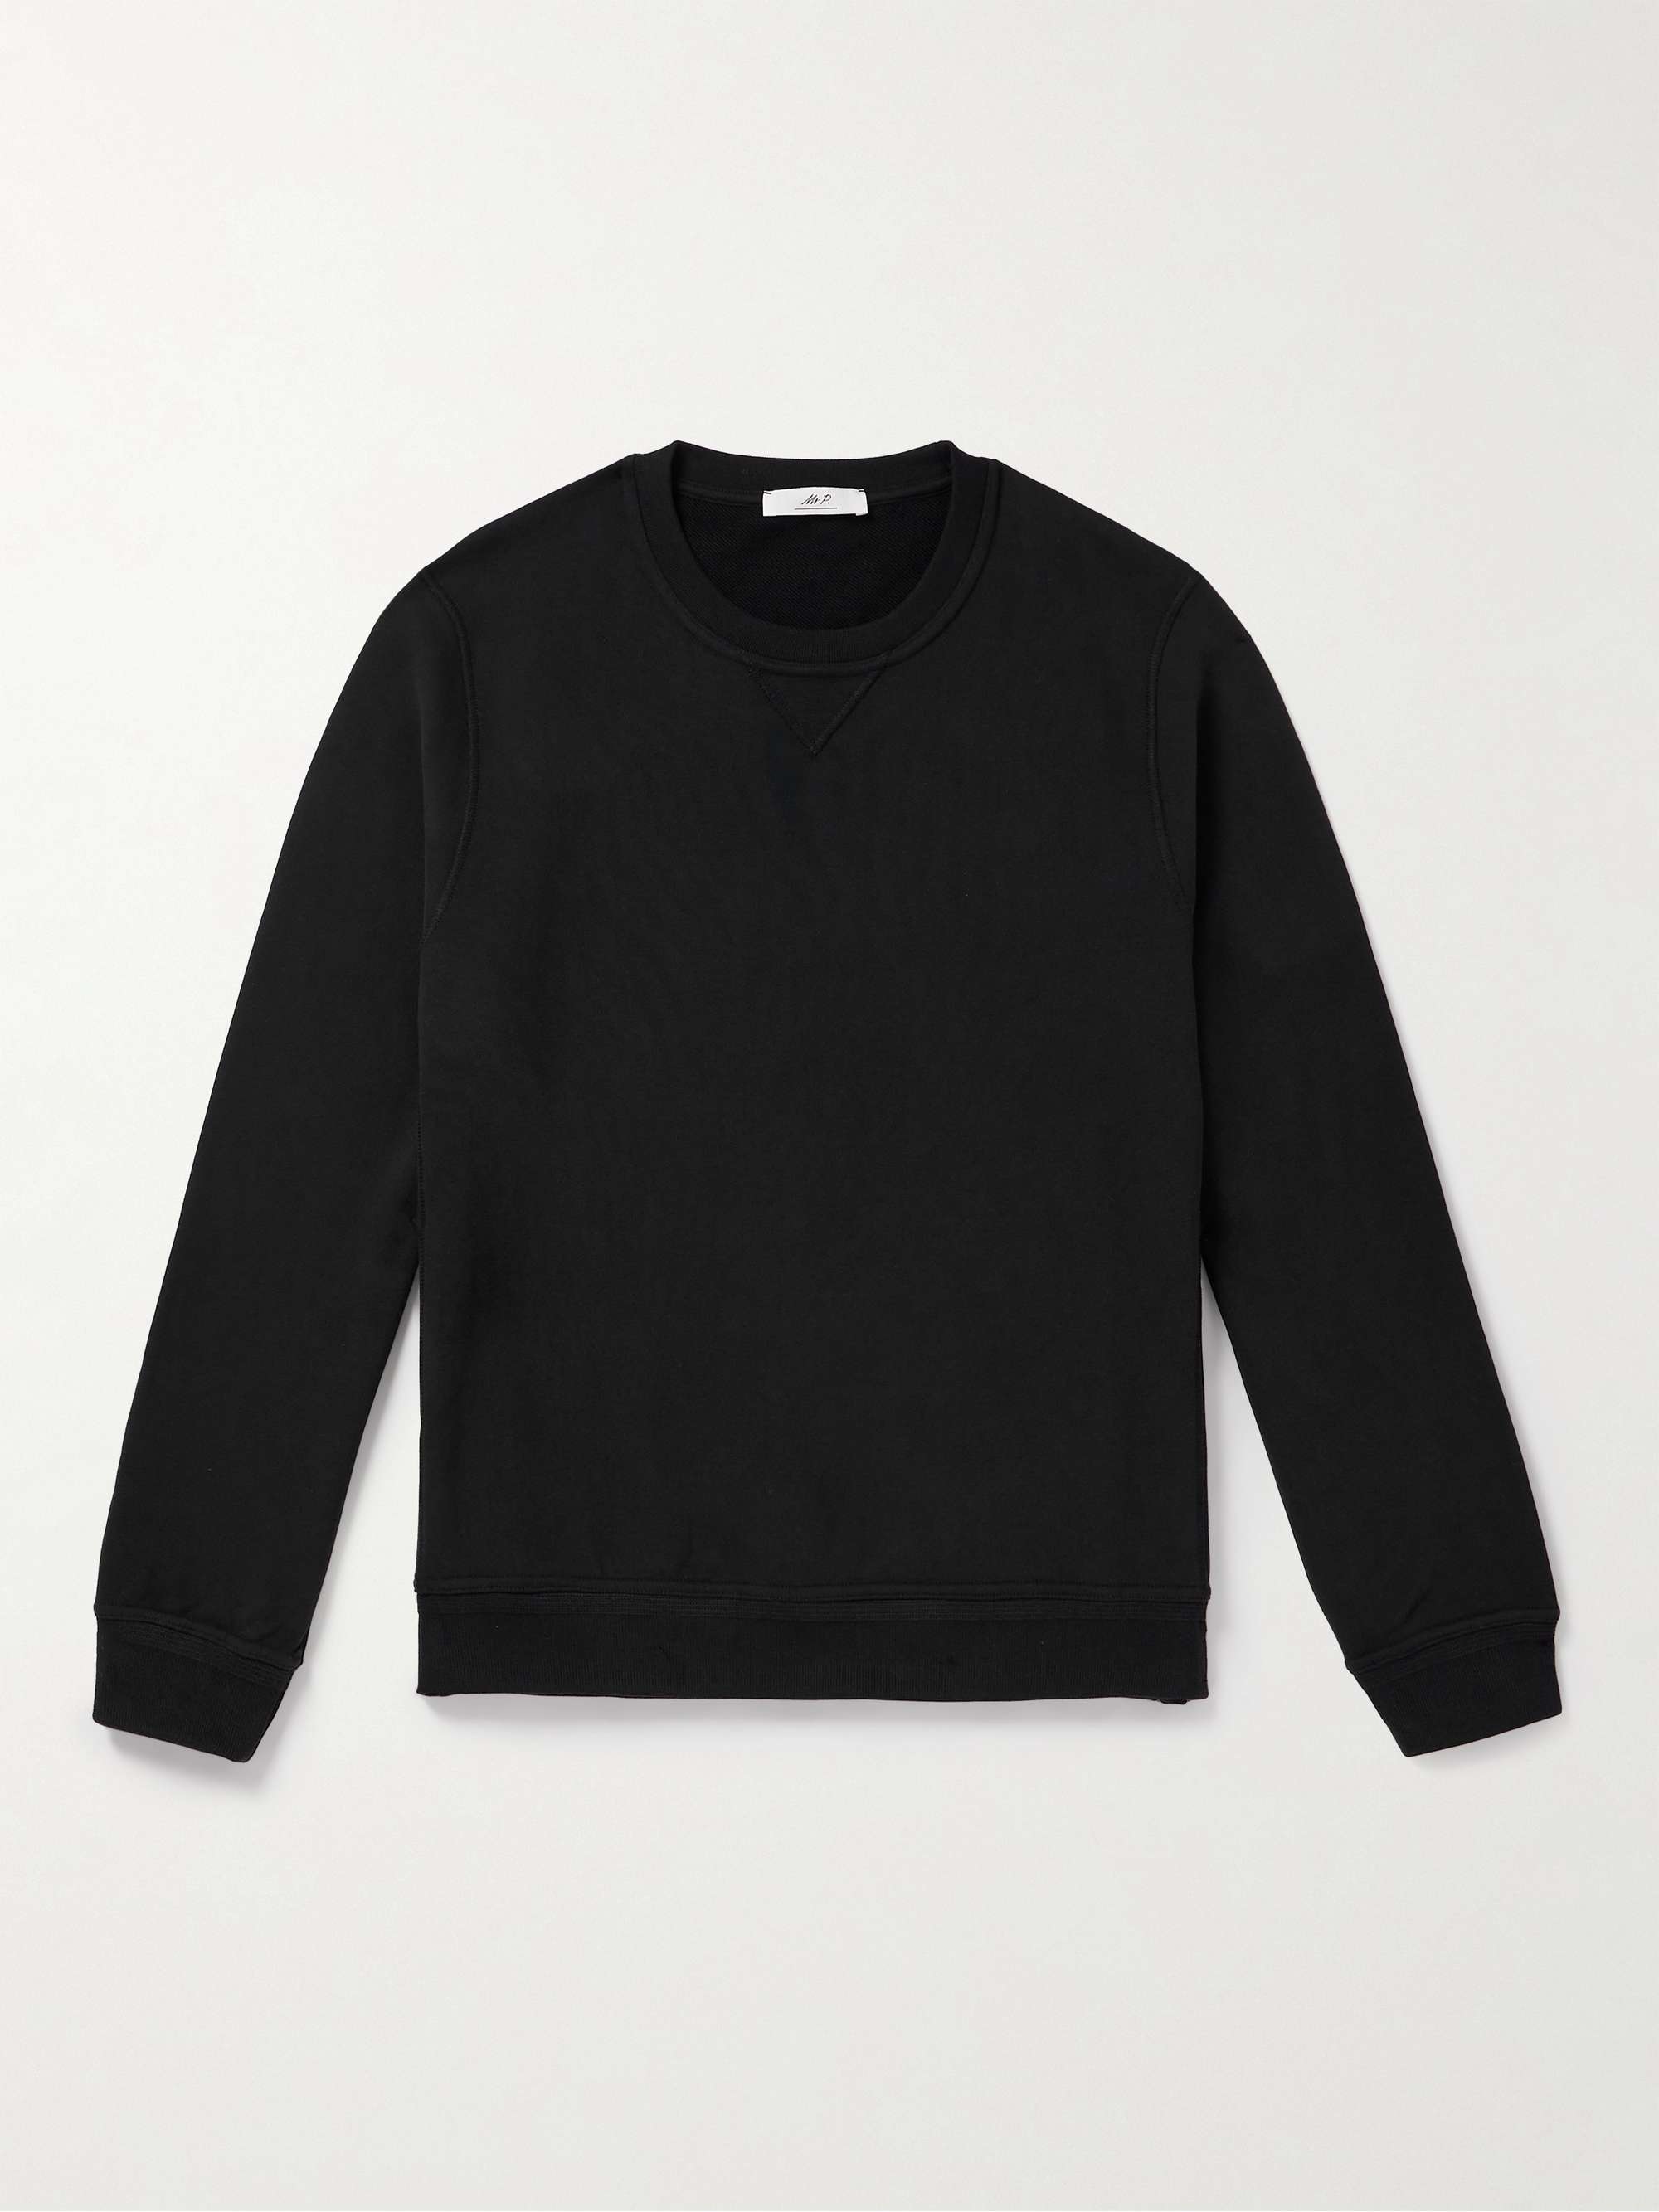 MR P. Cotton-Jersey Sweatshirt for Men | MR PORTER